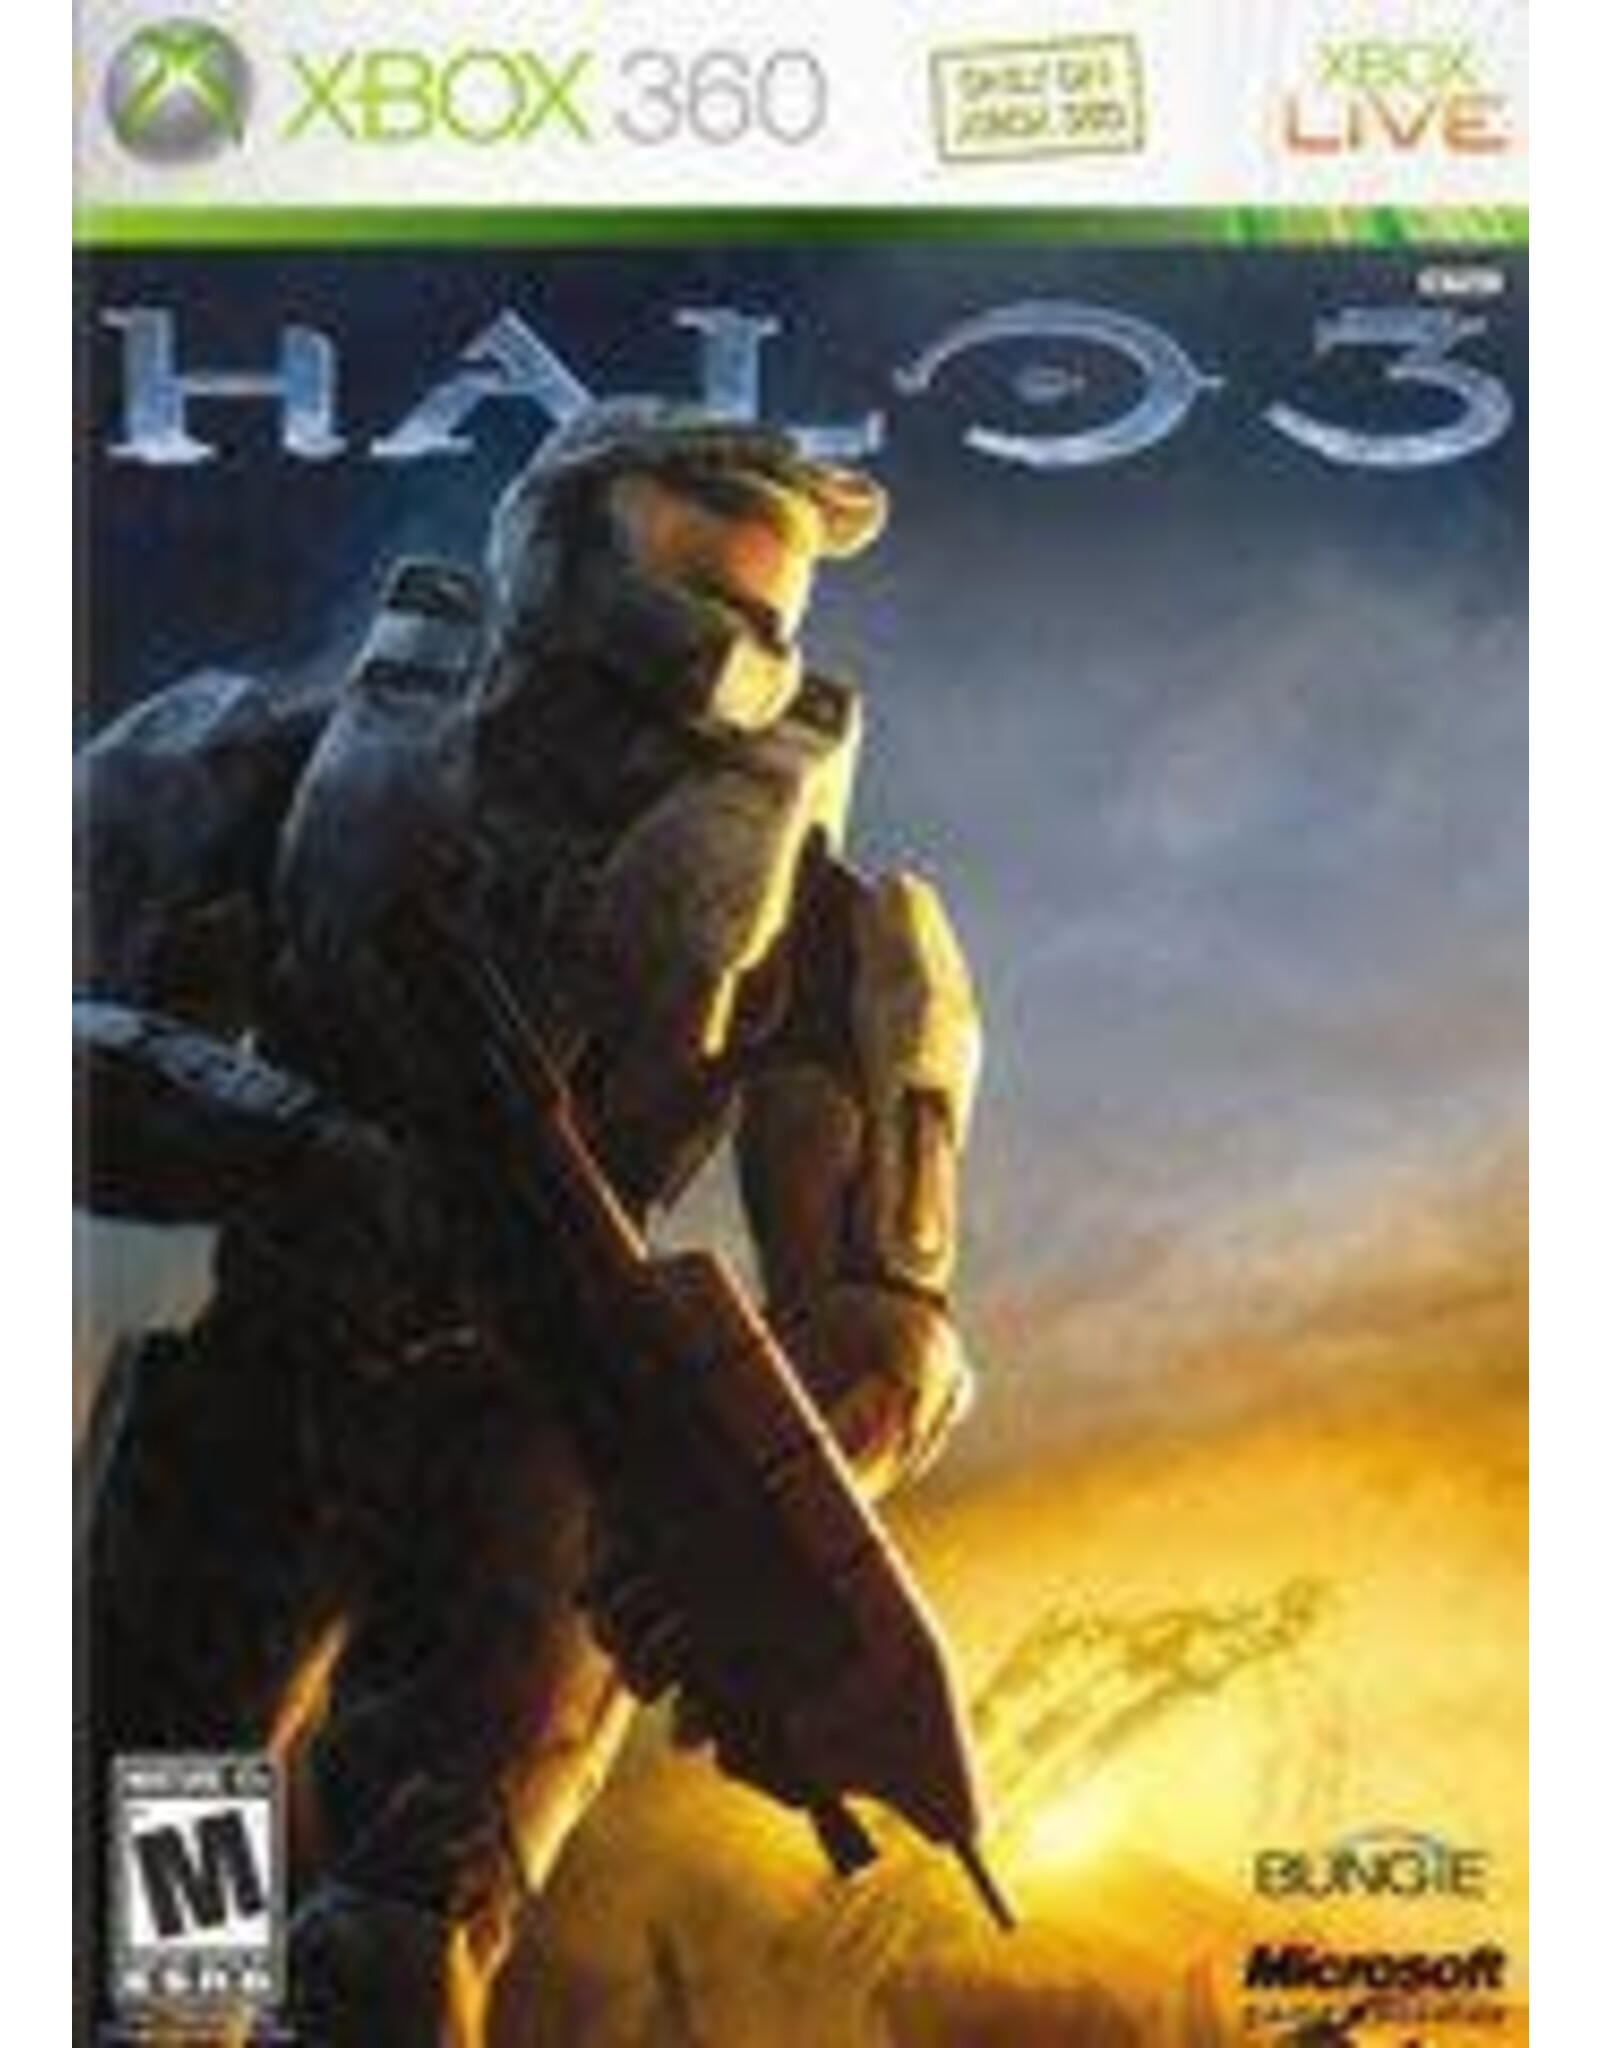 Xbox 360 Halo 3 (Used)